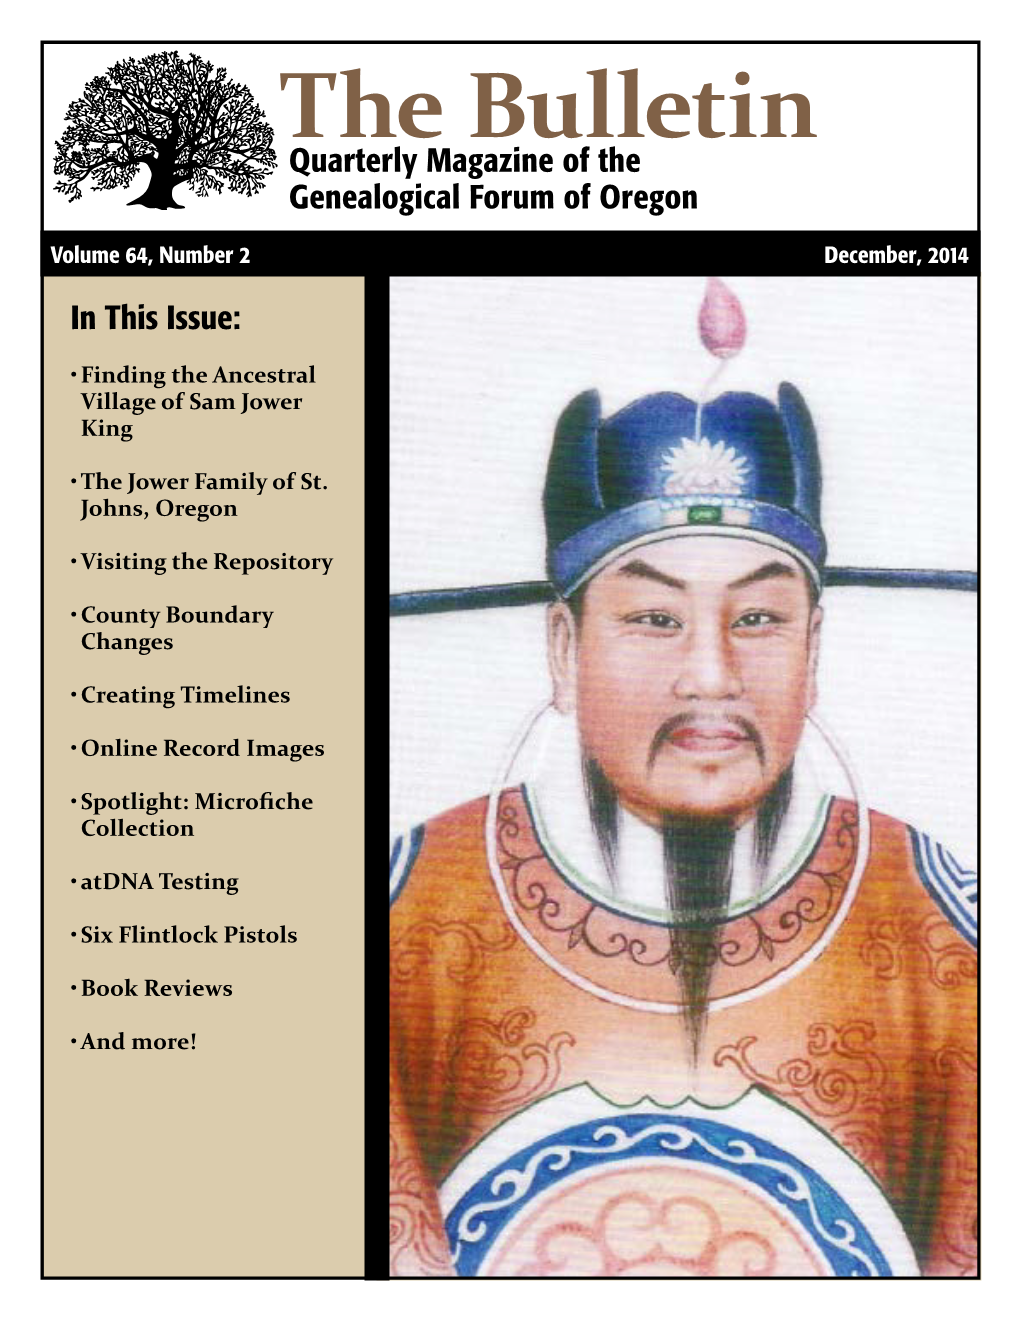 The Bulletin Quarterly Magazine of the Genealogical Forum of Oregon